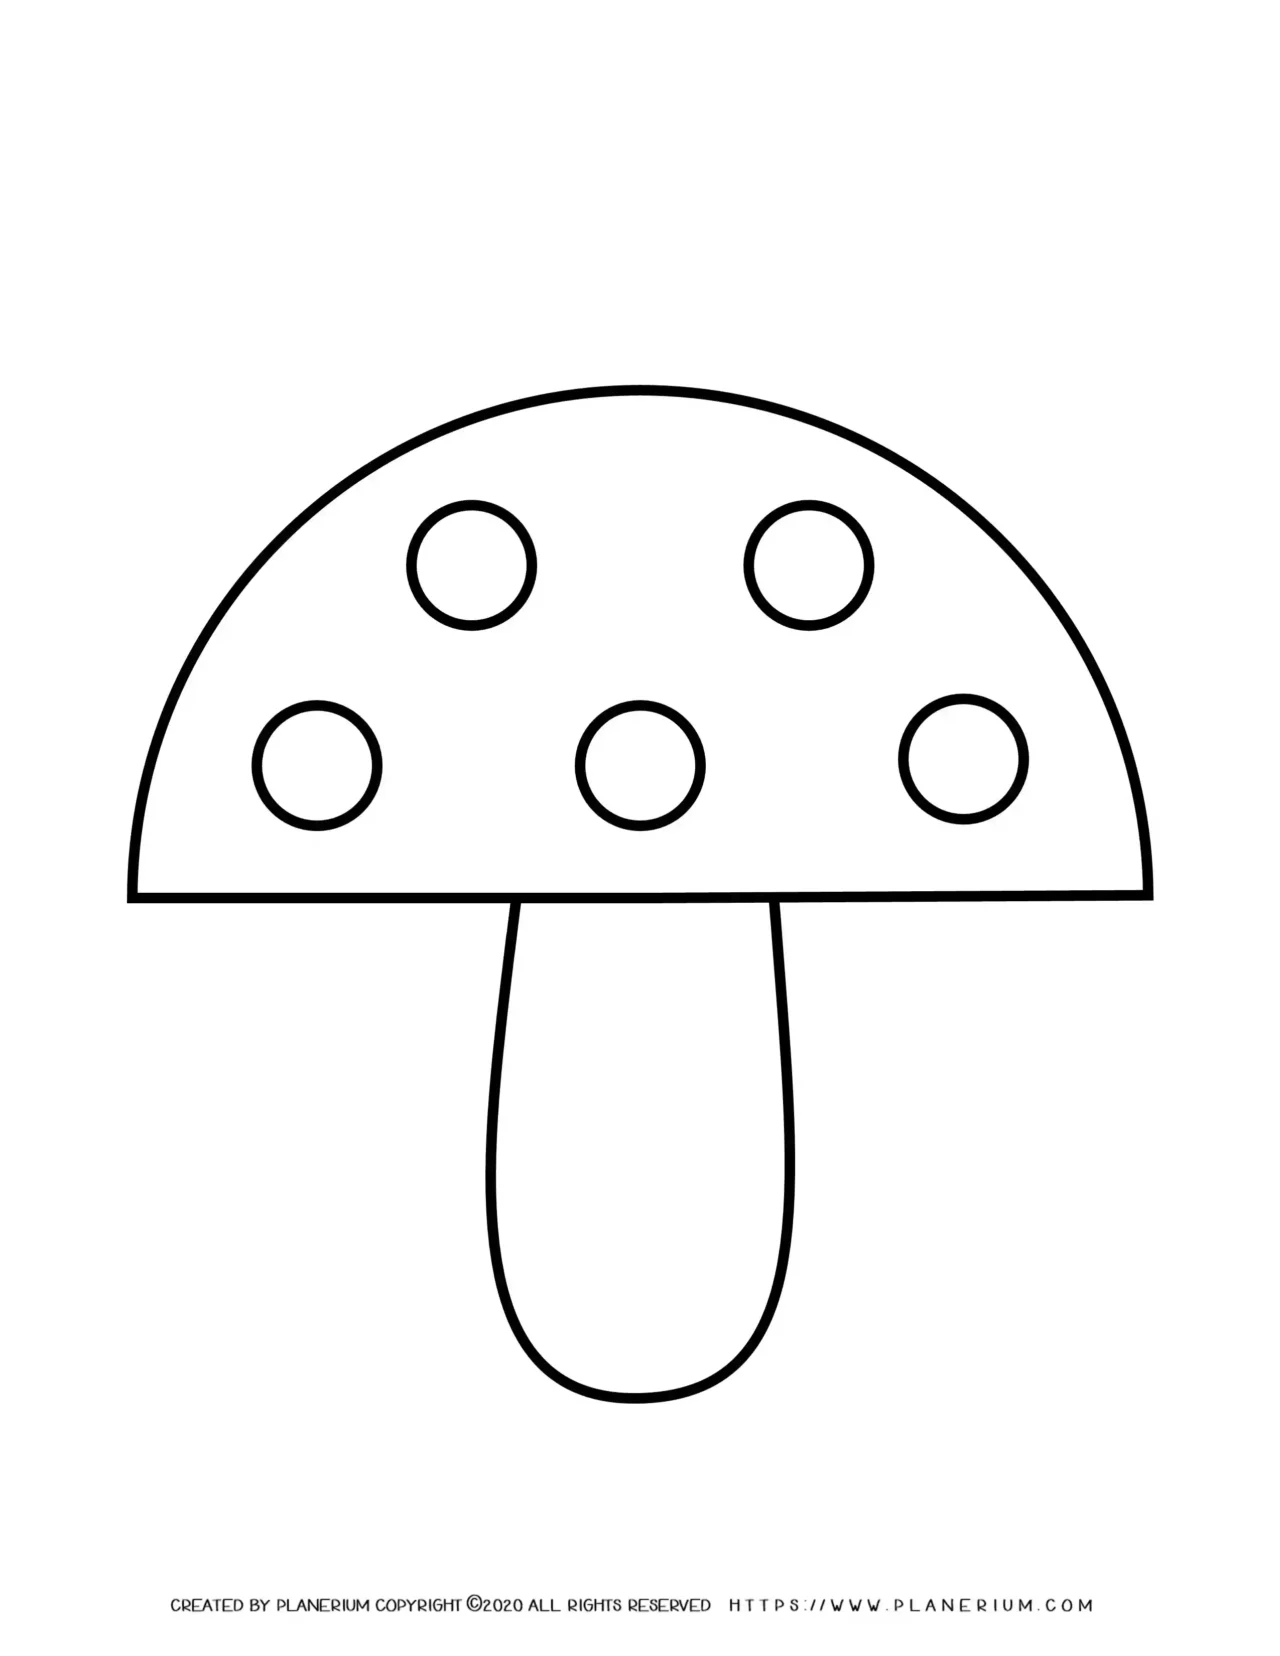 Fall Season - Coloring page - Mushroom